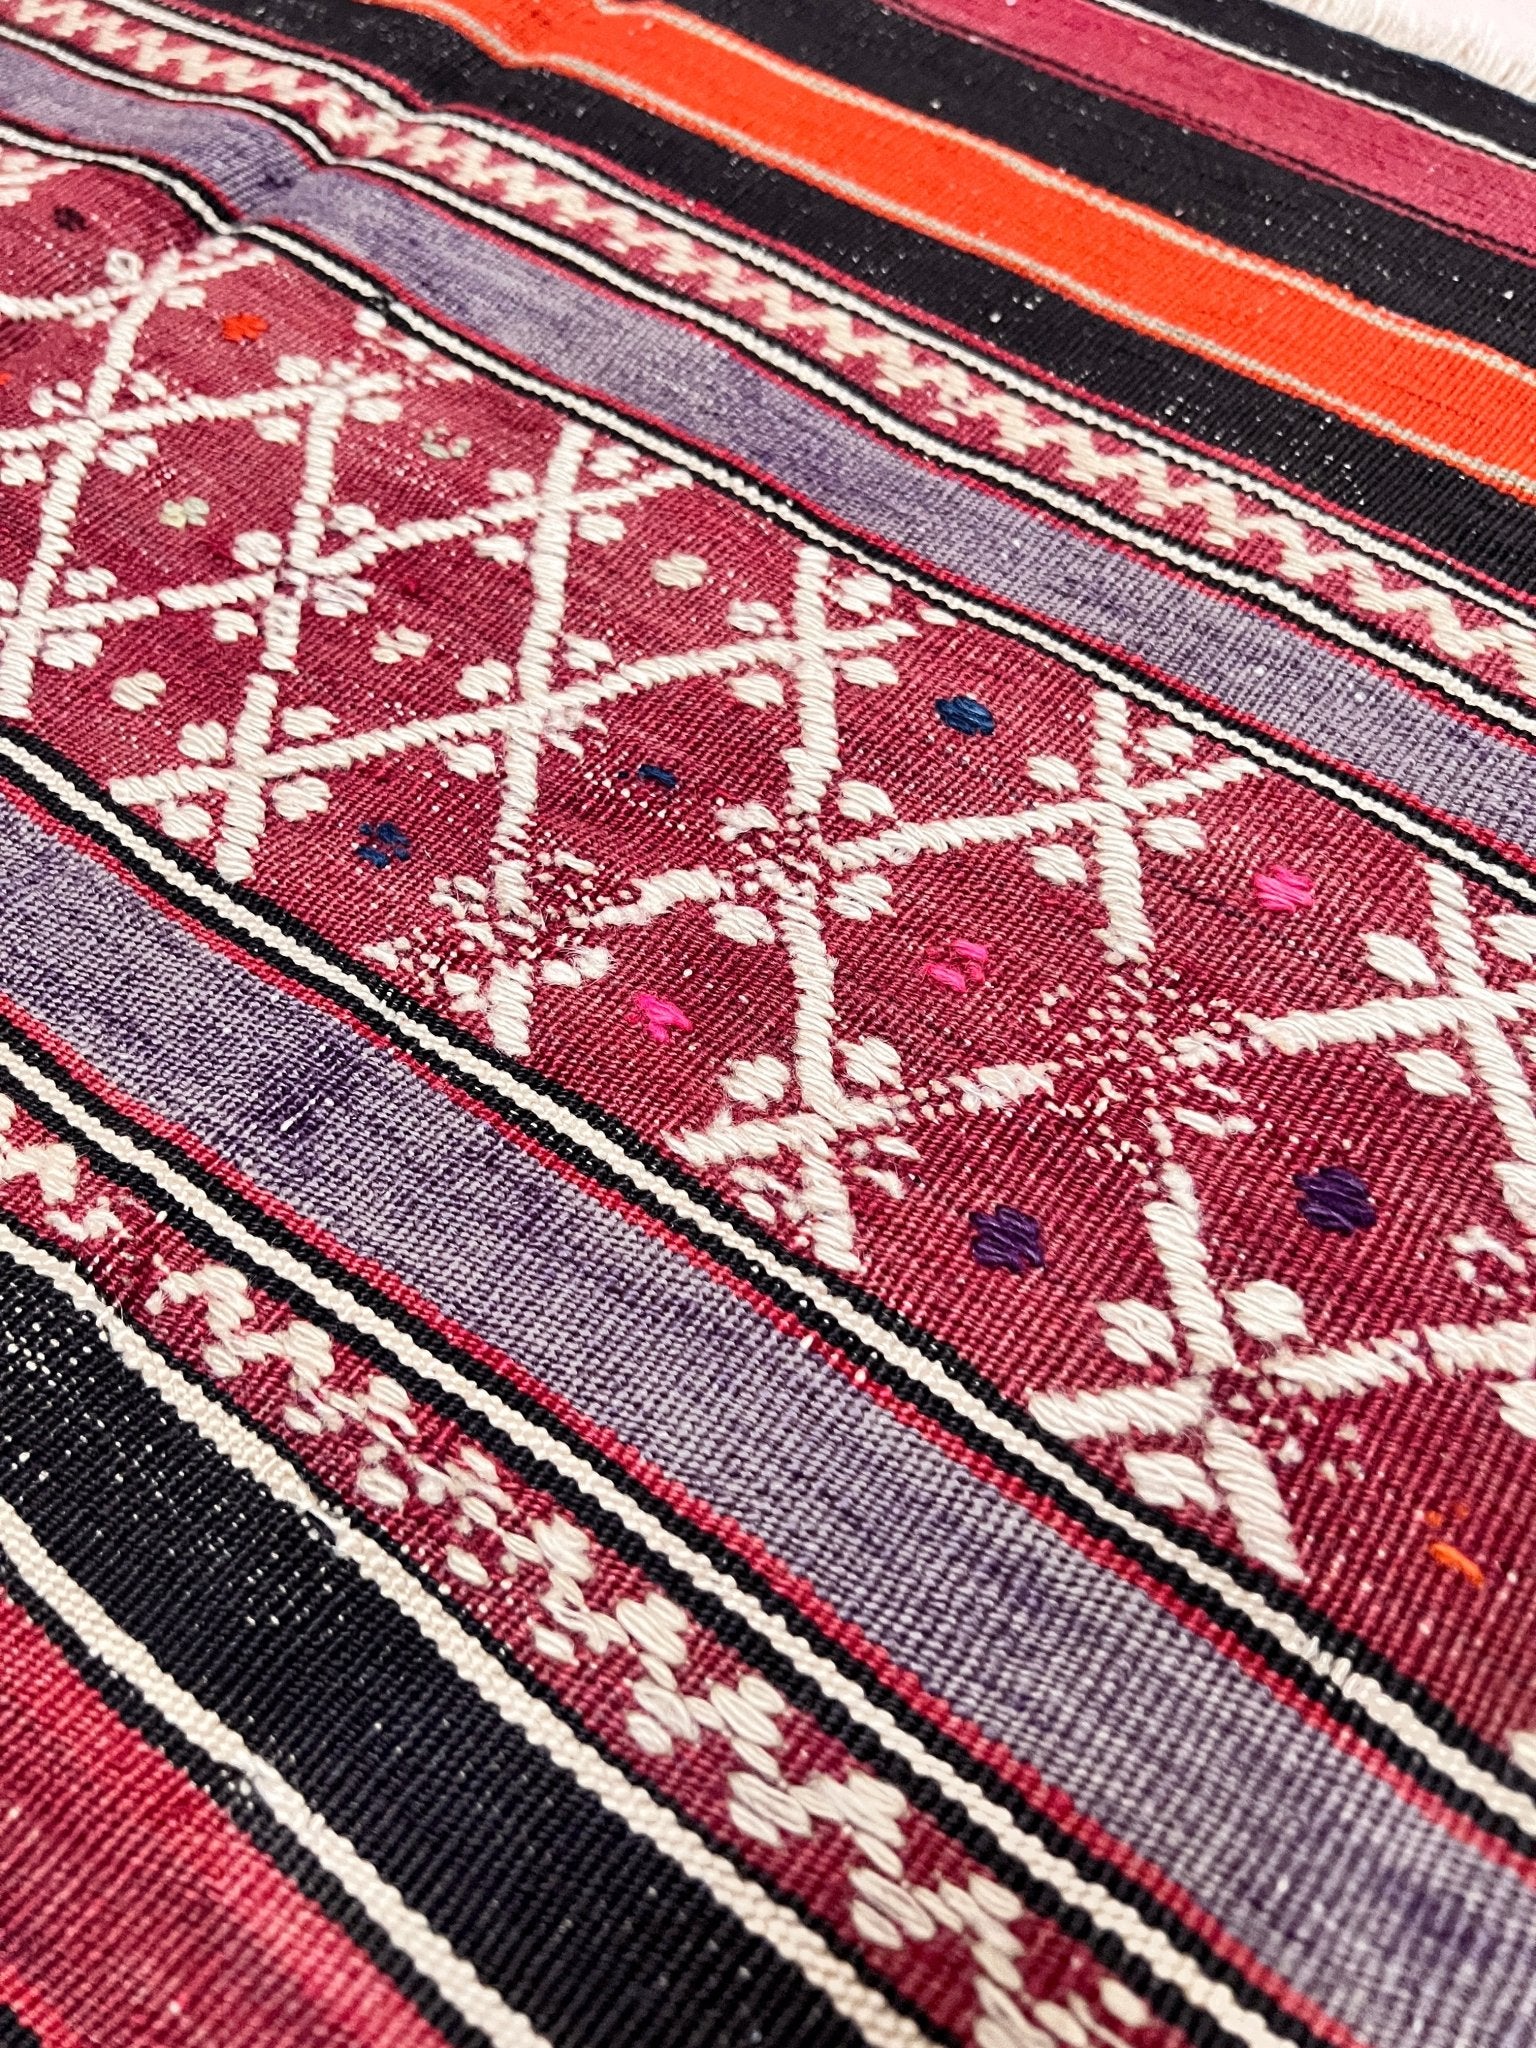 Pergamum handmade wool kilim turkish rug shop San Francisco Bay Area Portland Seattle. Buy handmade rugs online free shipping